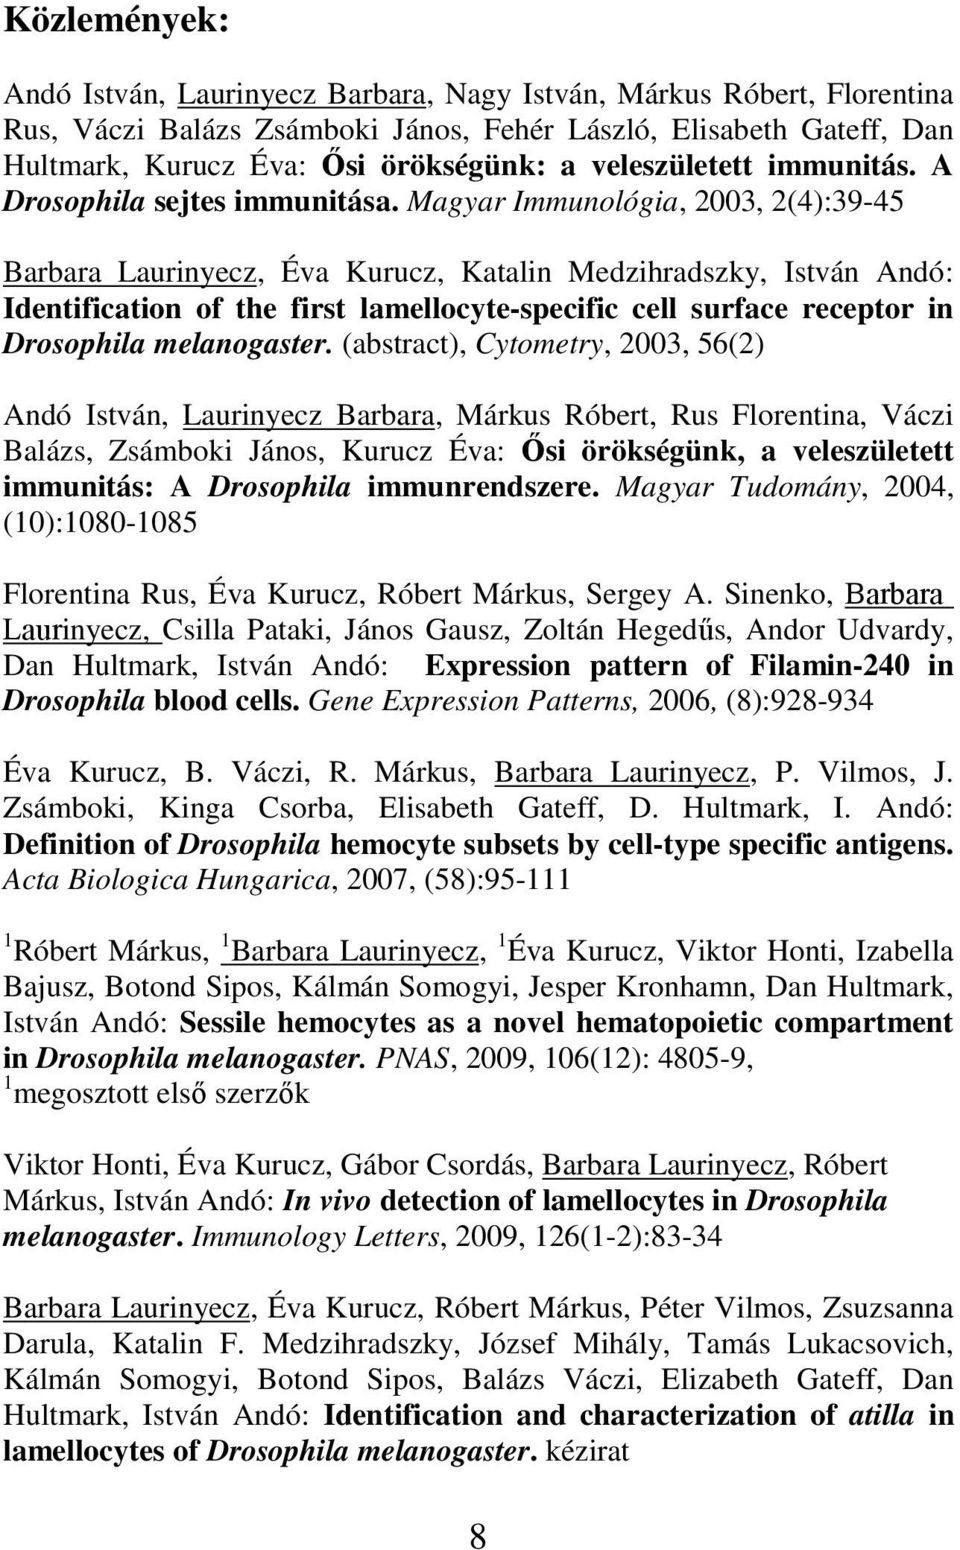 Magyar Immunológia, 2003, 2(4):39-45 Barbara Laurinyecz, Éva Kurucz, Katalin Medzihradszky, István Andó: Identification of the first lamellocyte-specific cell surface receptor in Drosophila